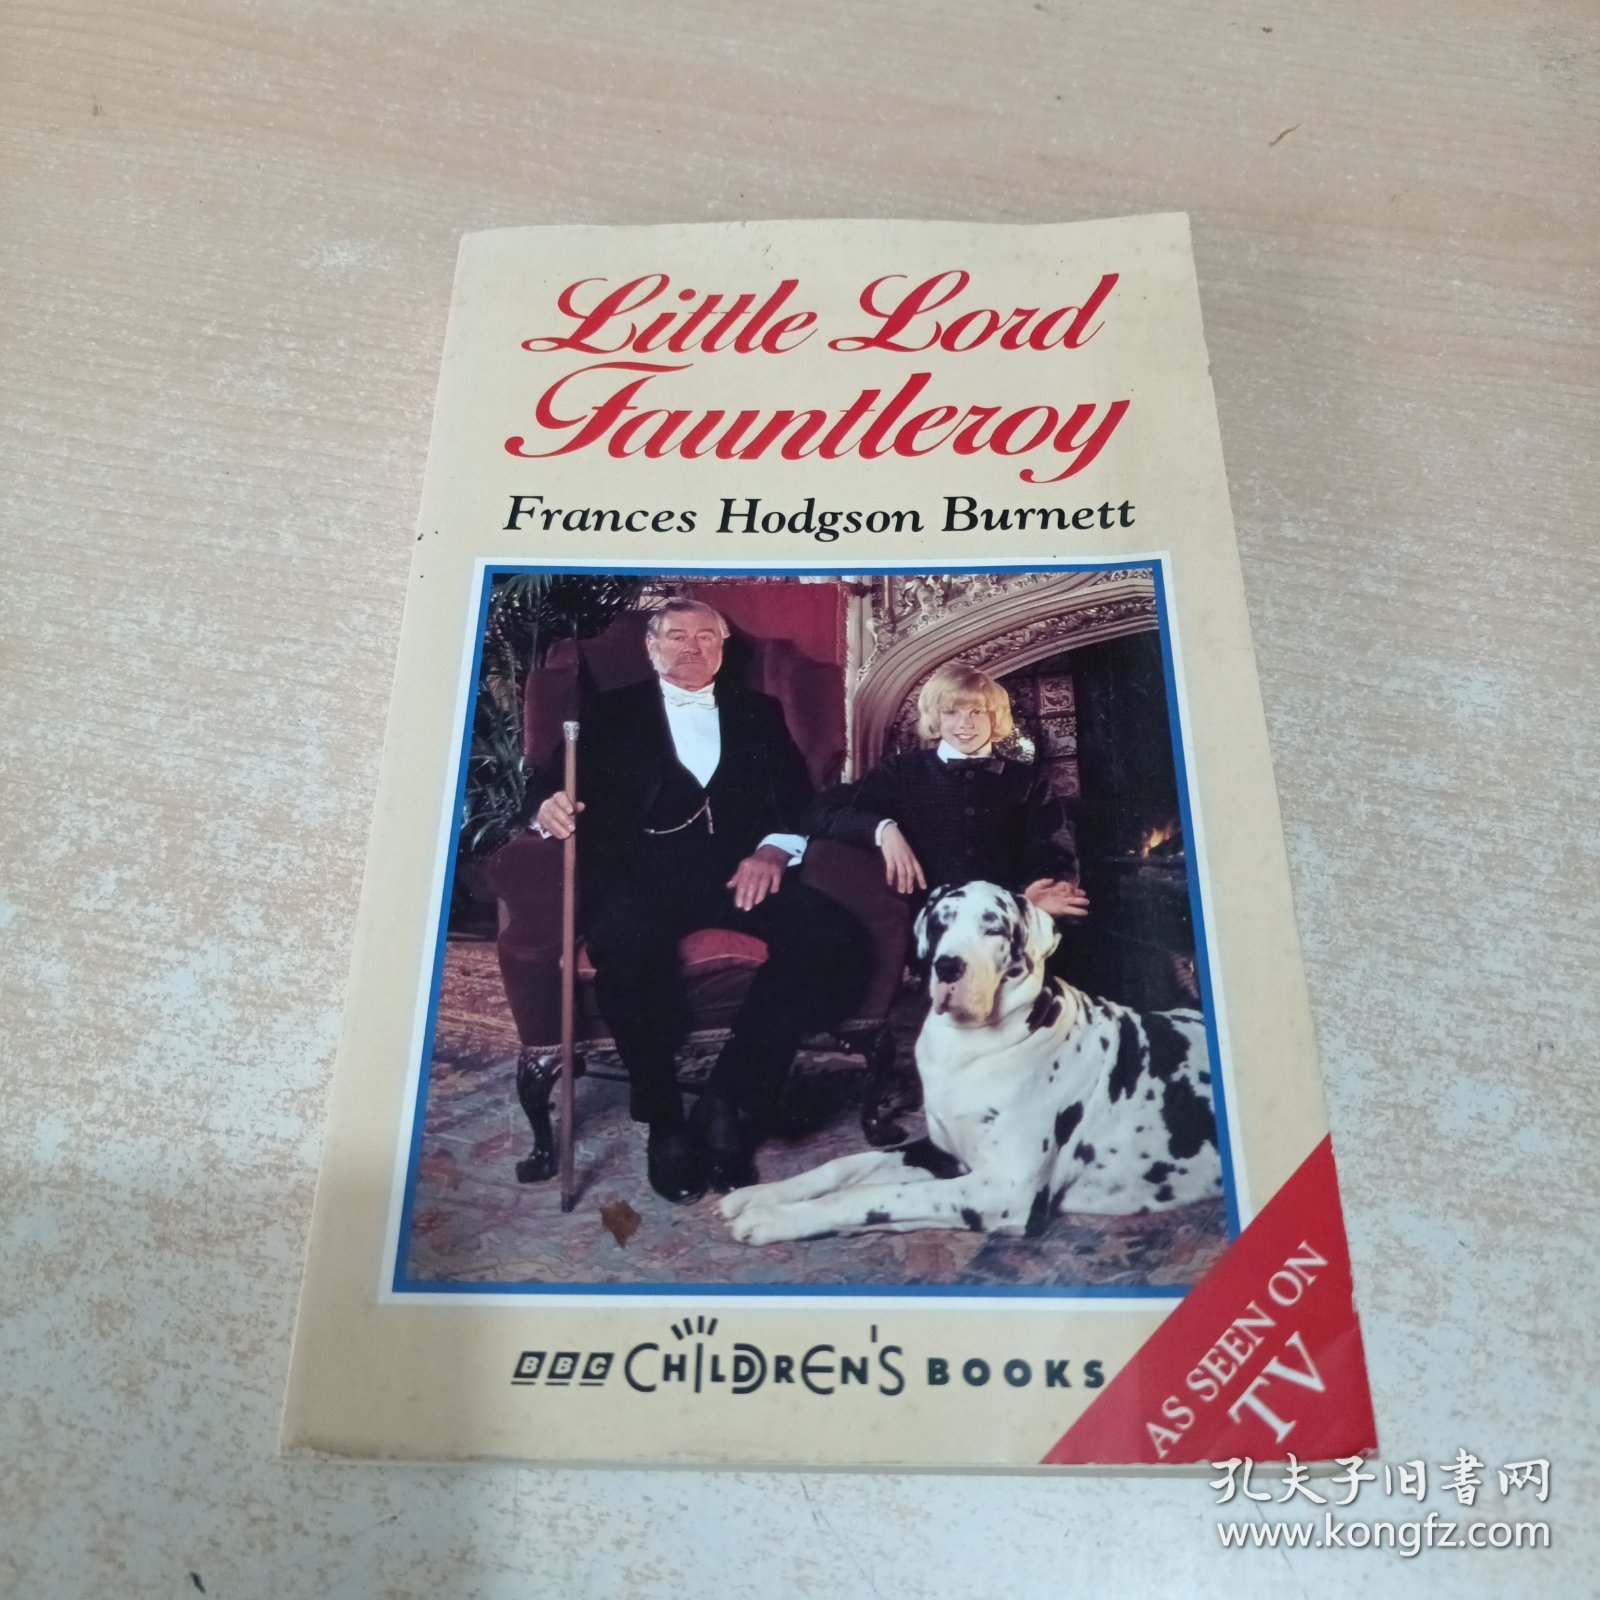 Little Lord Fauntleroy: Frances Hodgson Burnett